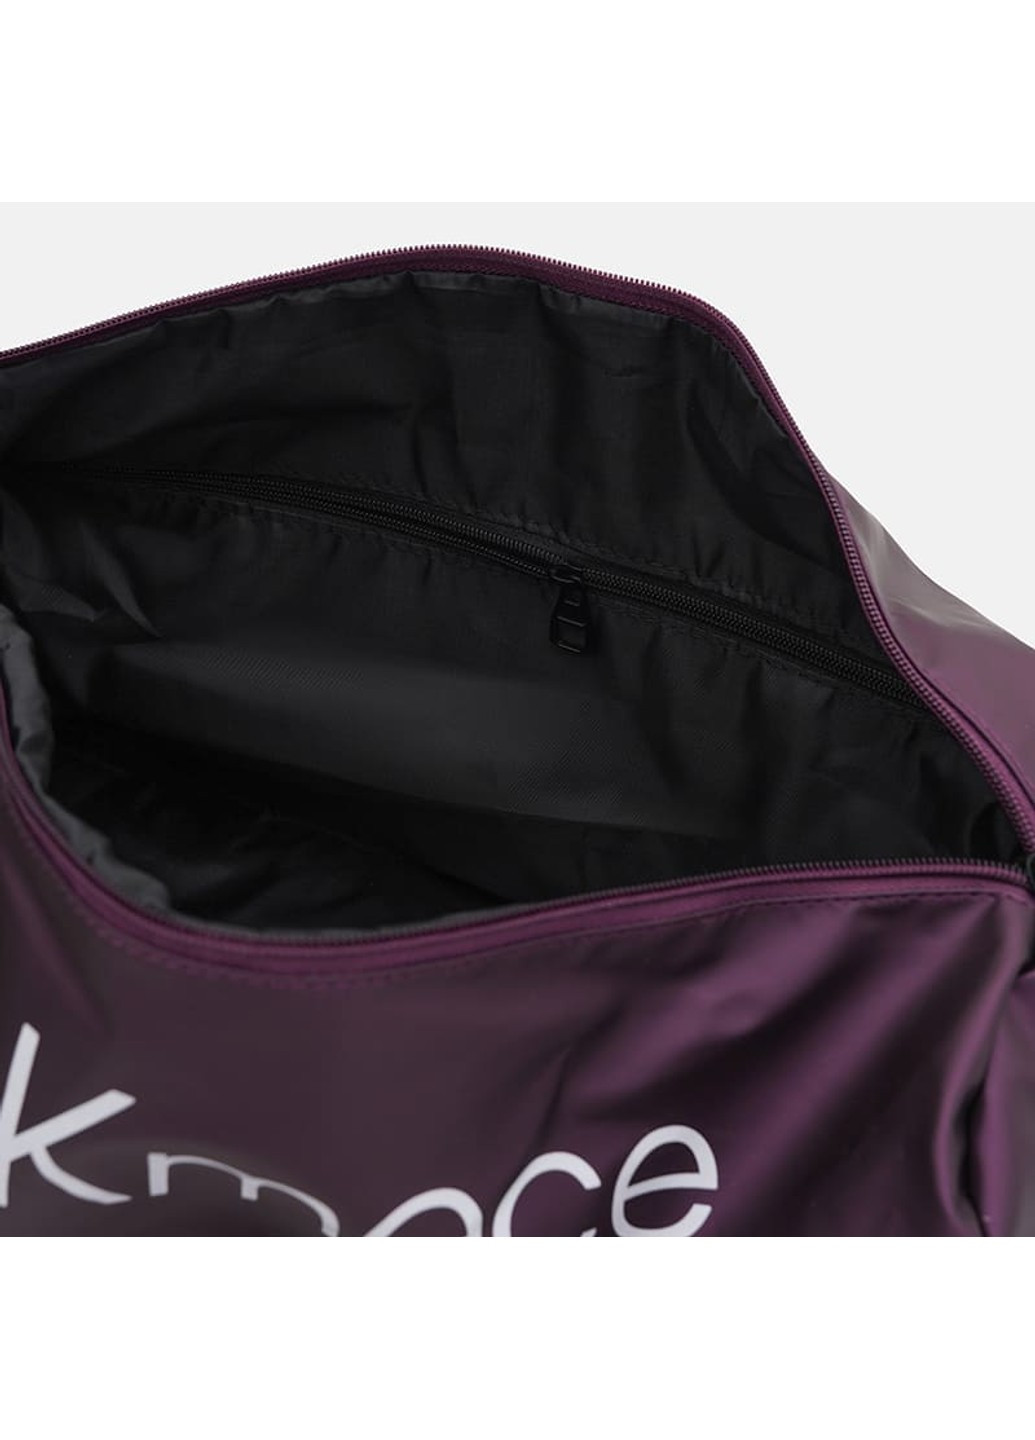 Женская сумка C1lrd201v-violet Monsen (267146244)